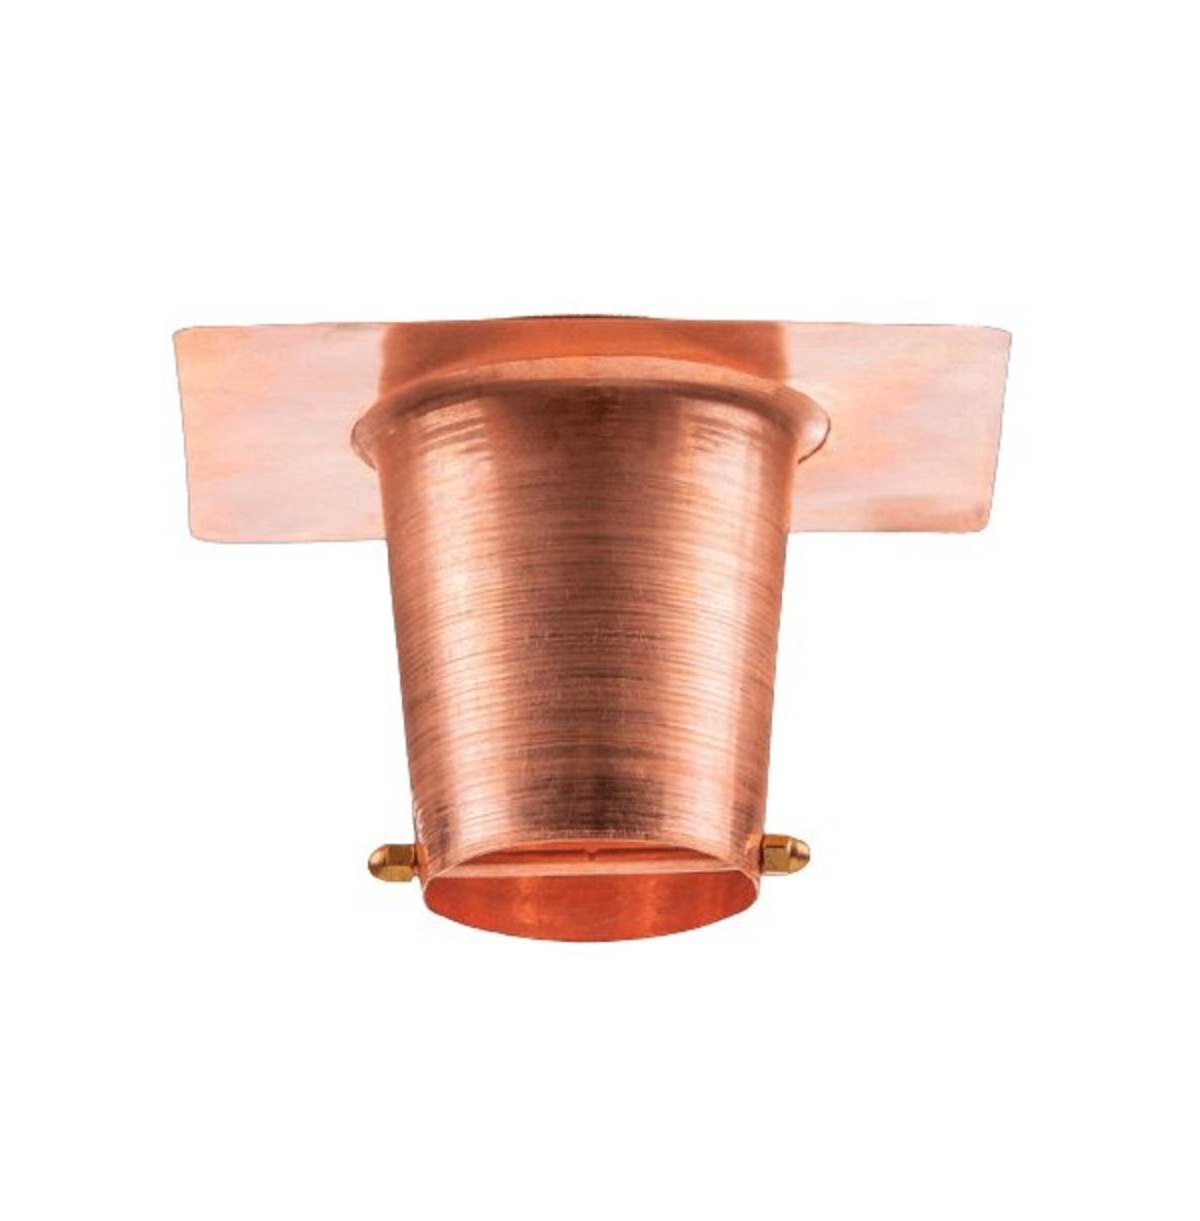 2 Inch Copper Gutter Adapter - Rain Chain Hanger & Diverter - Copper